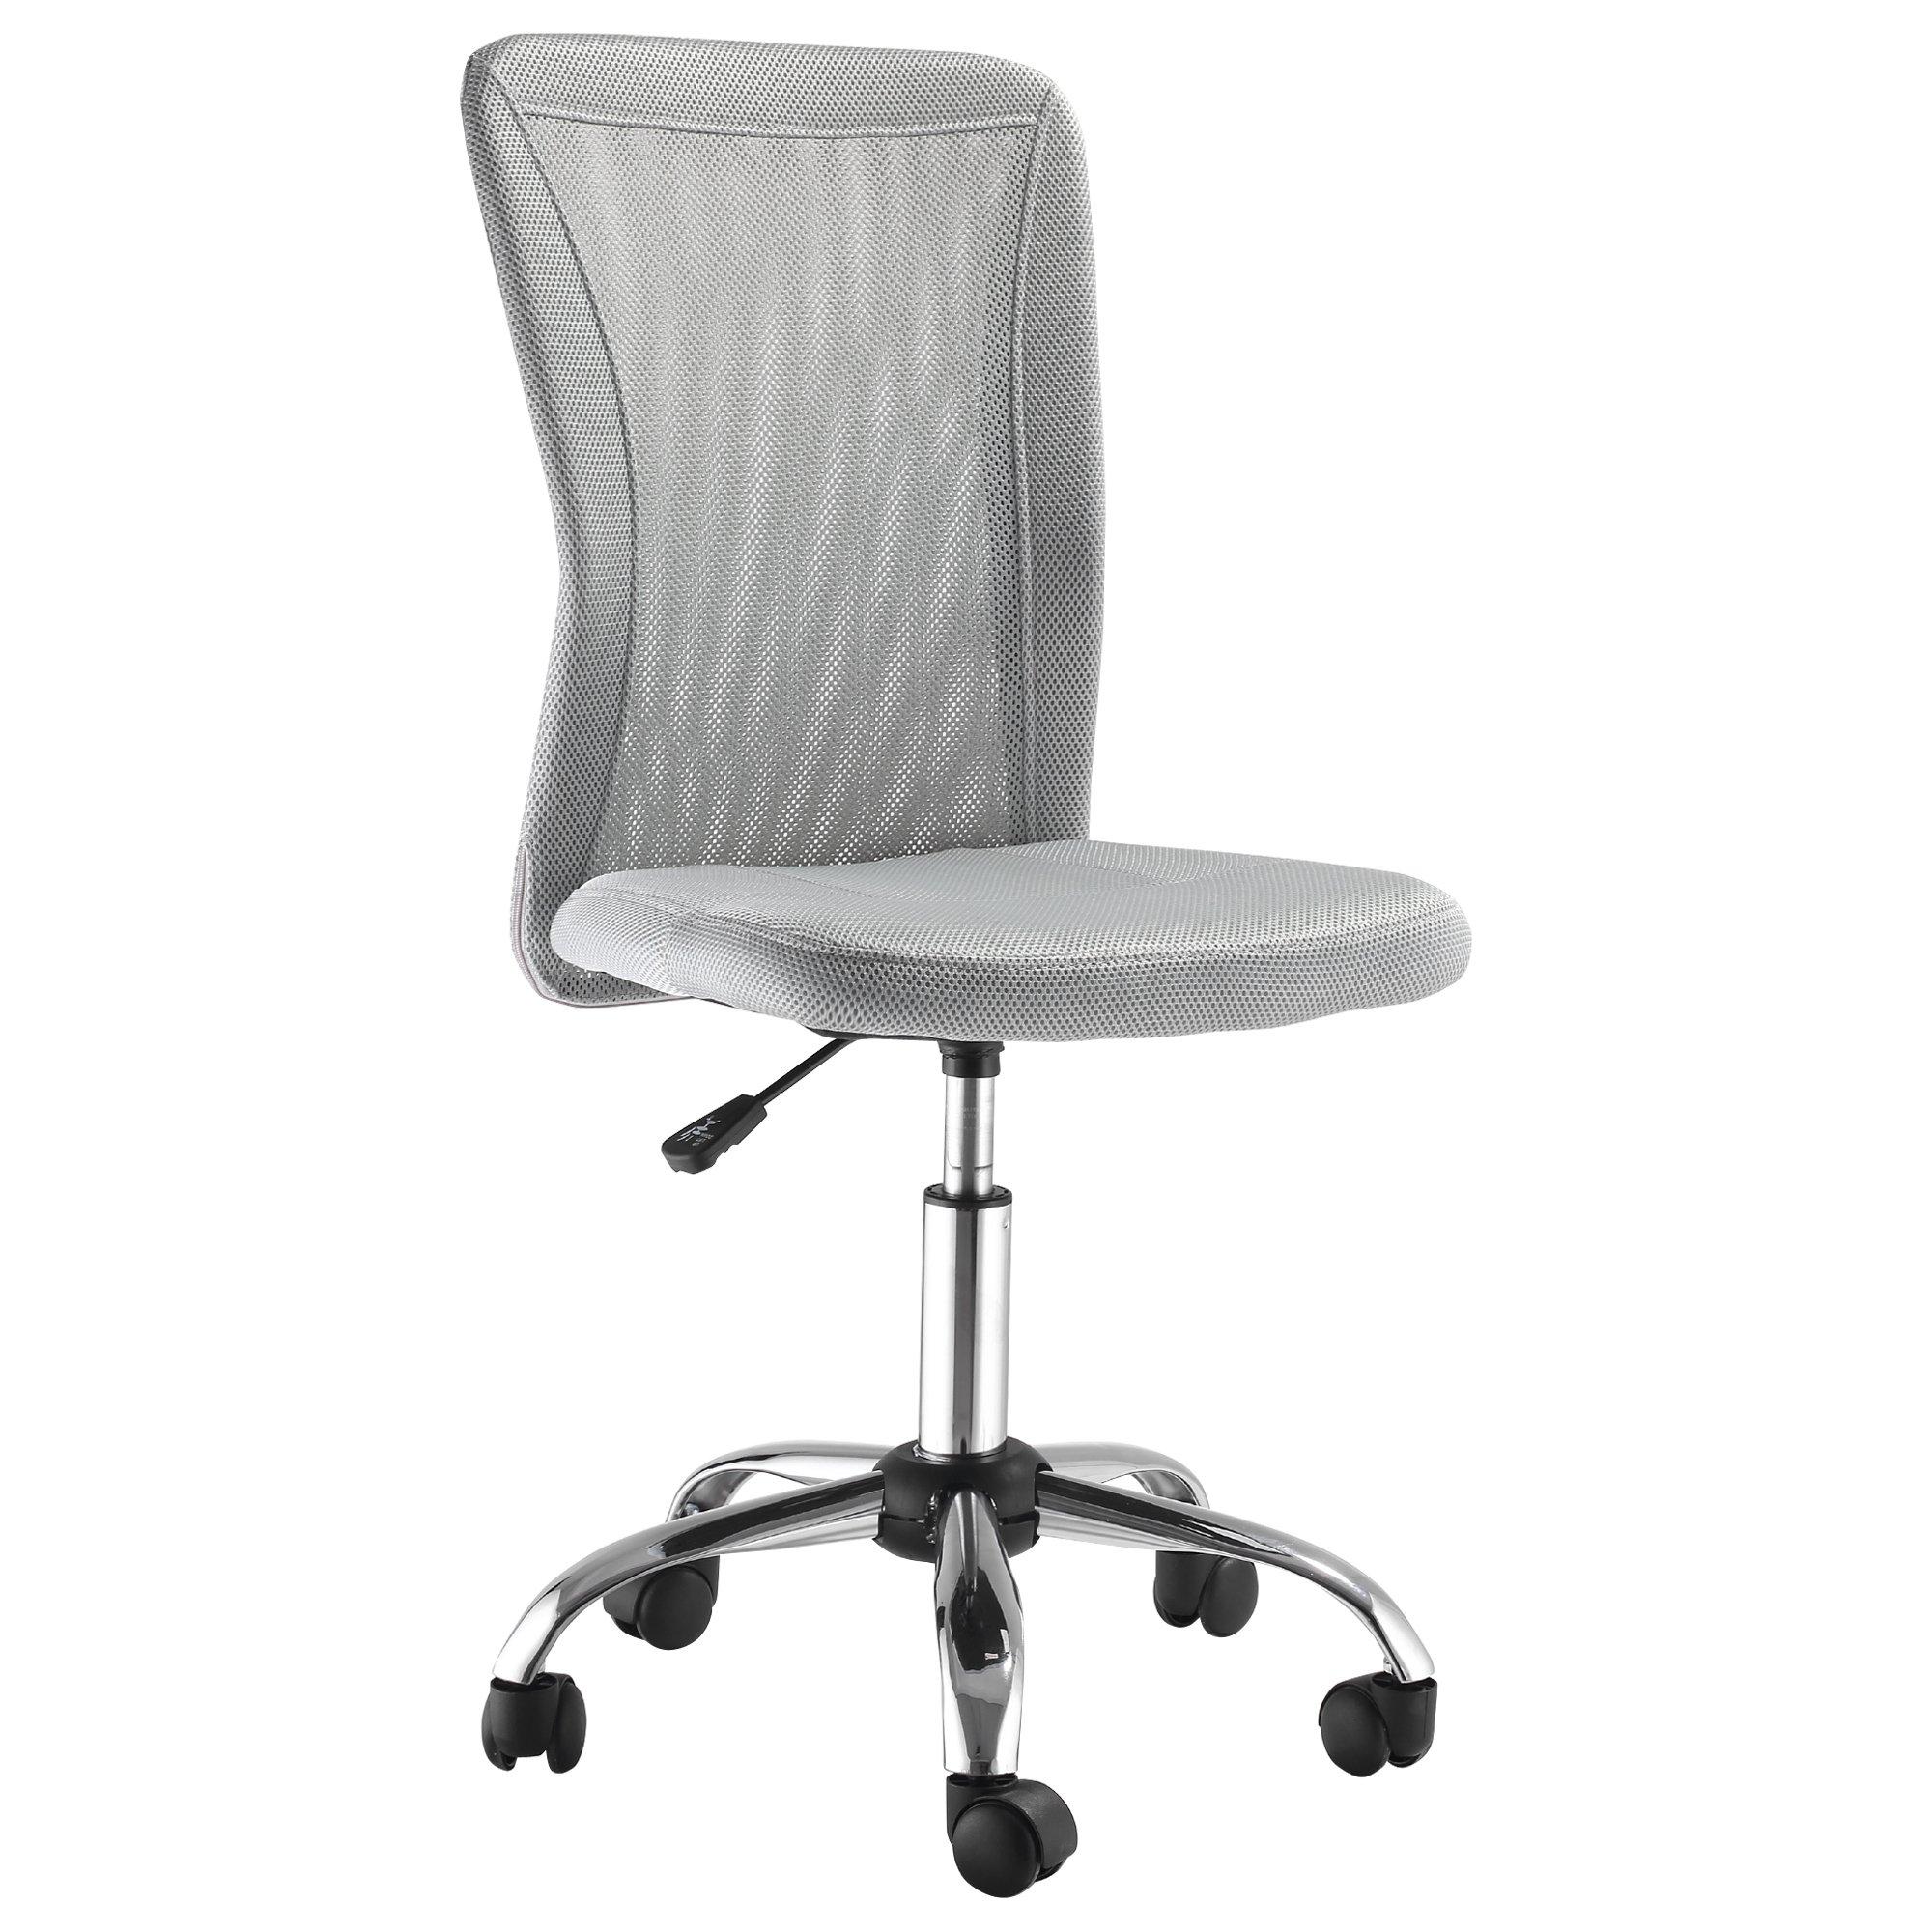 Armless Office Chair Ergonomic Padded Height Adjustable Mesh Back